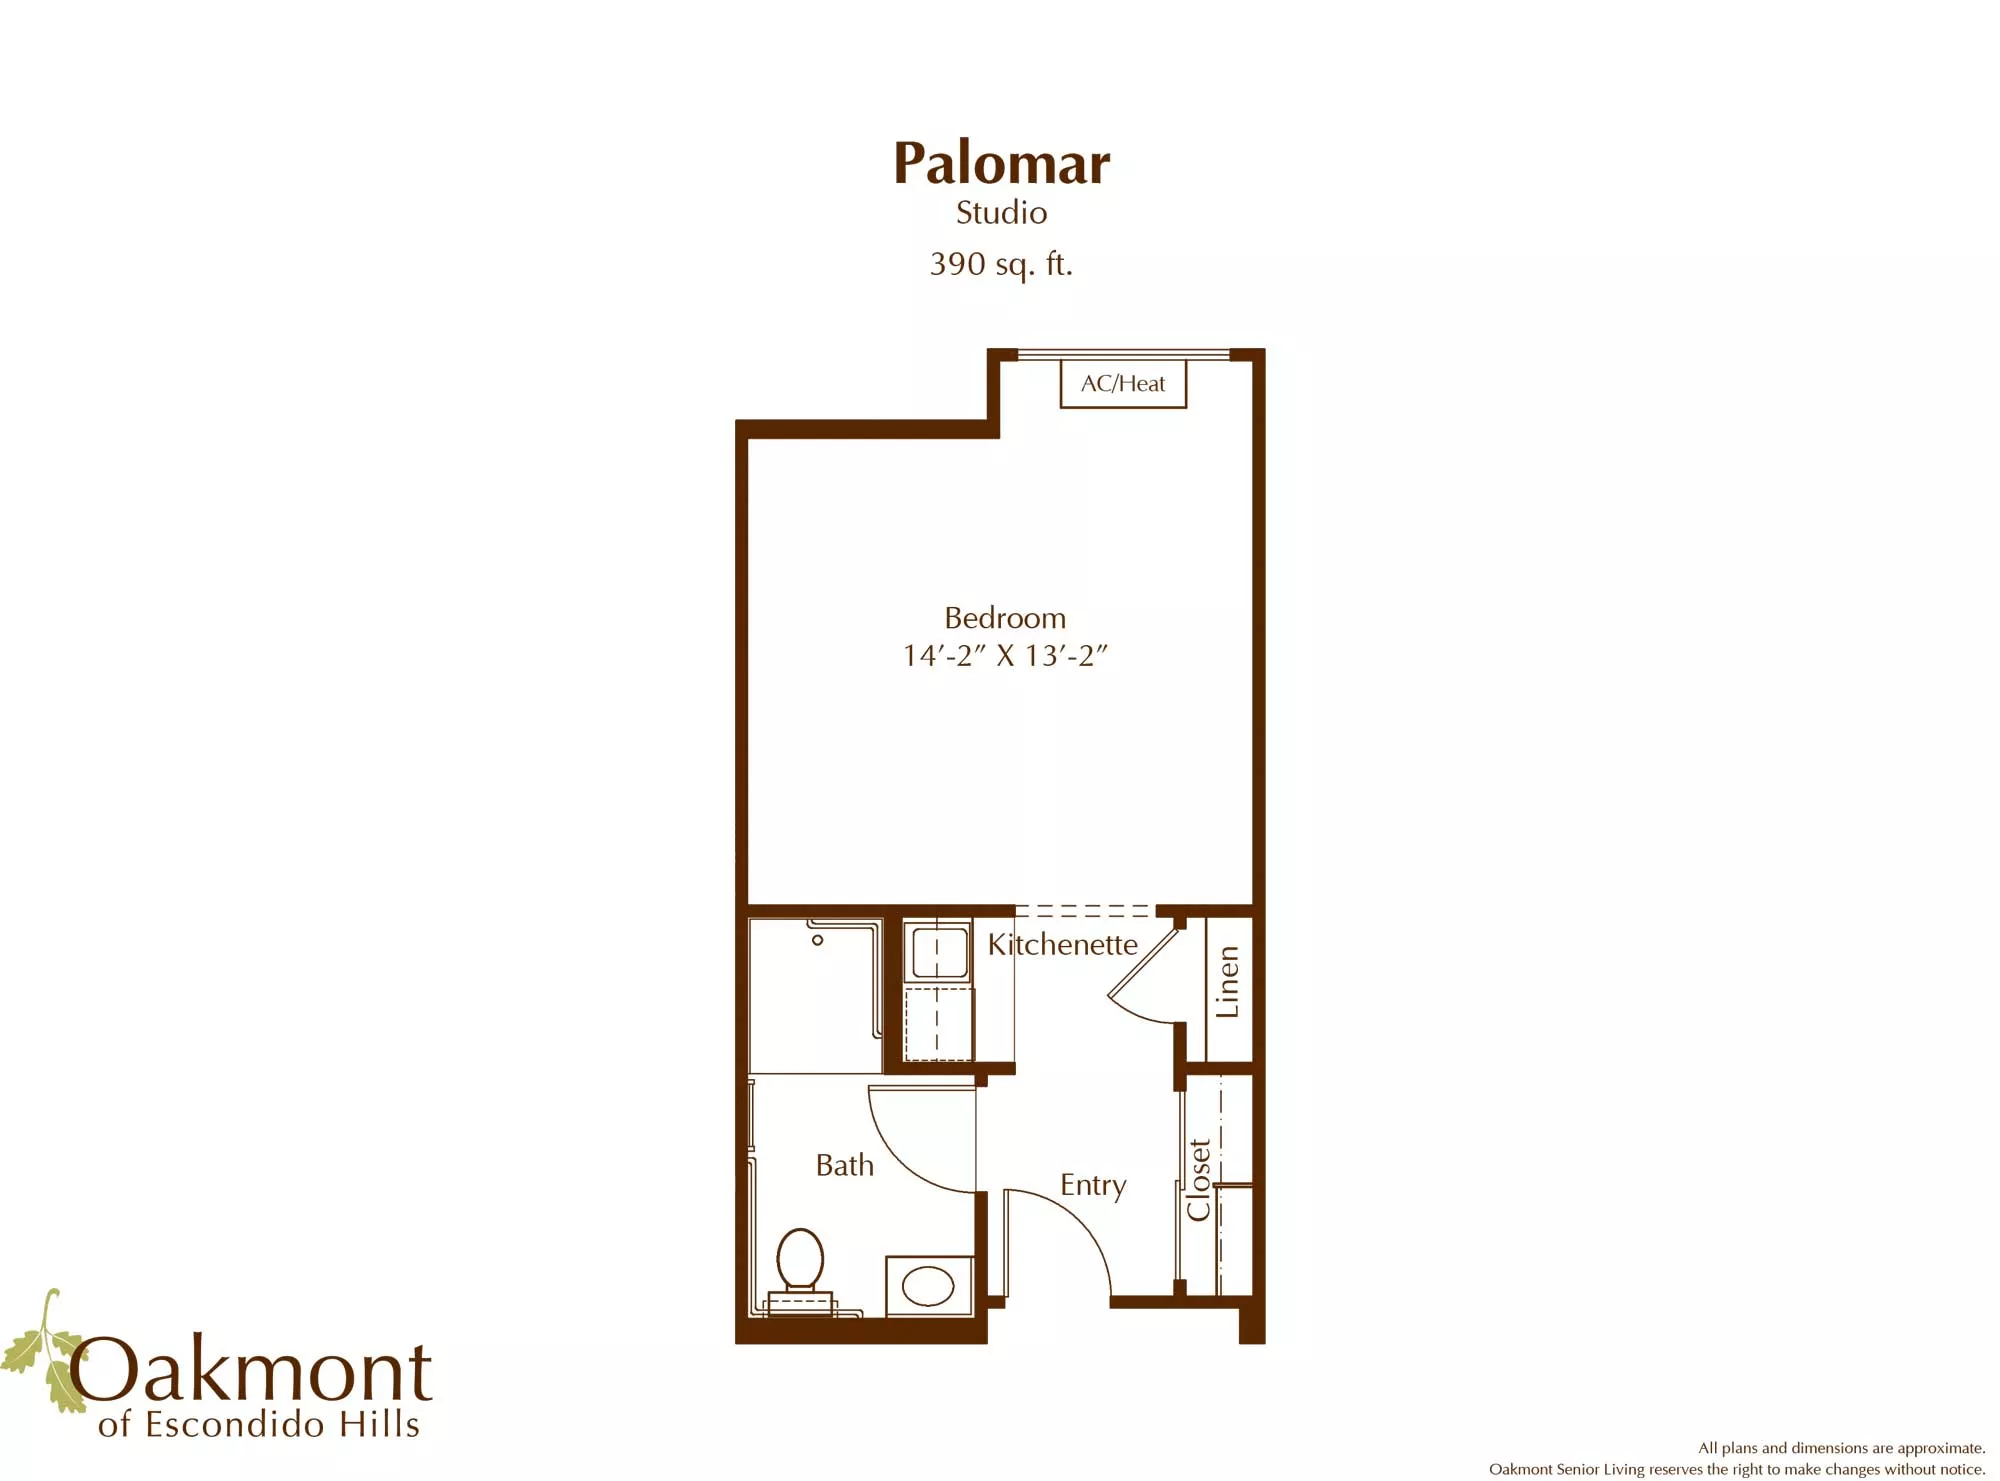 Palomar studio floor plan